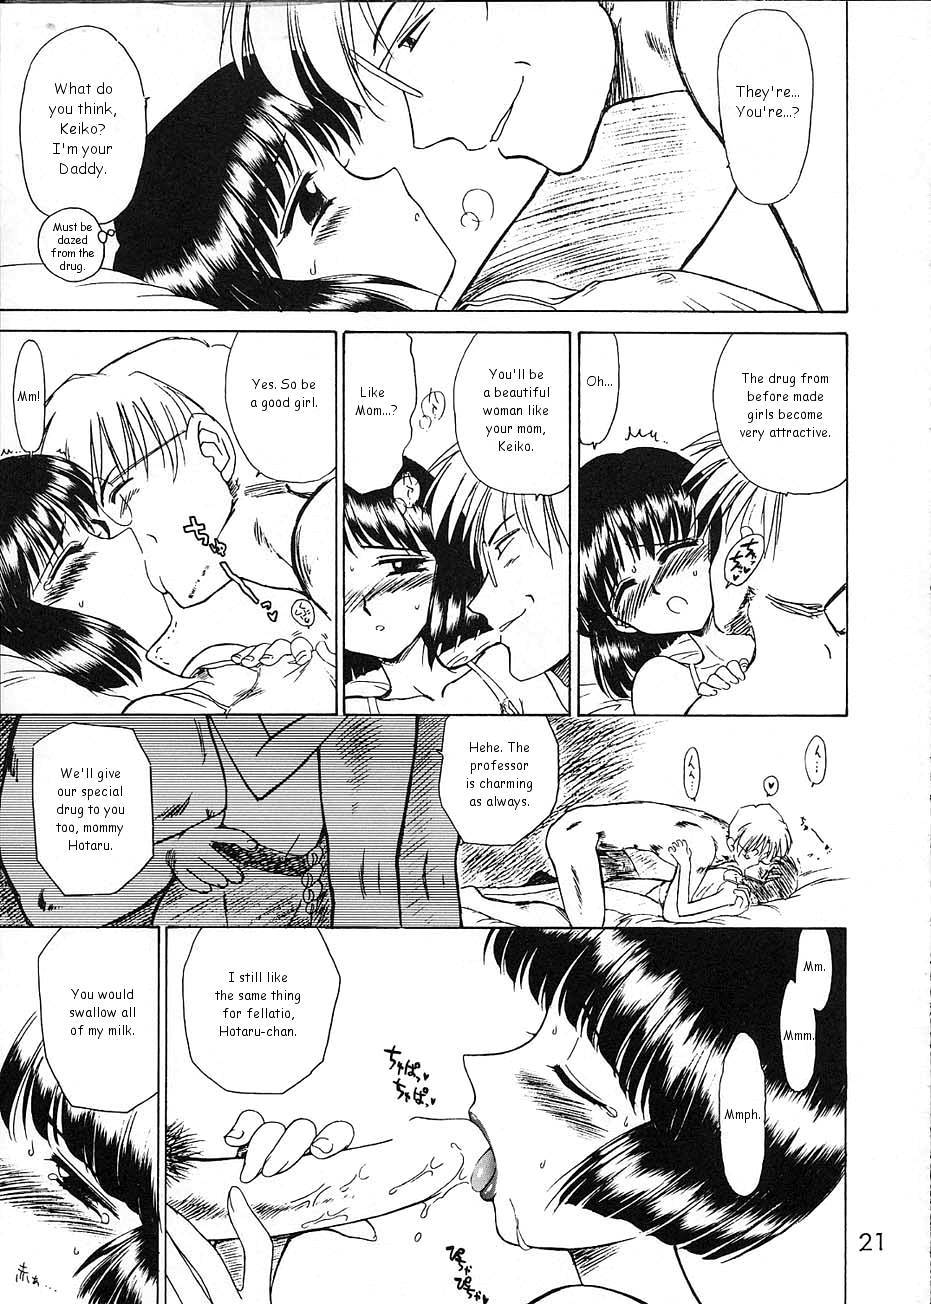 ATOM HEART FATHER sailor moon 19 hentai manga